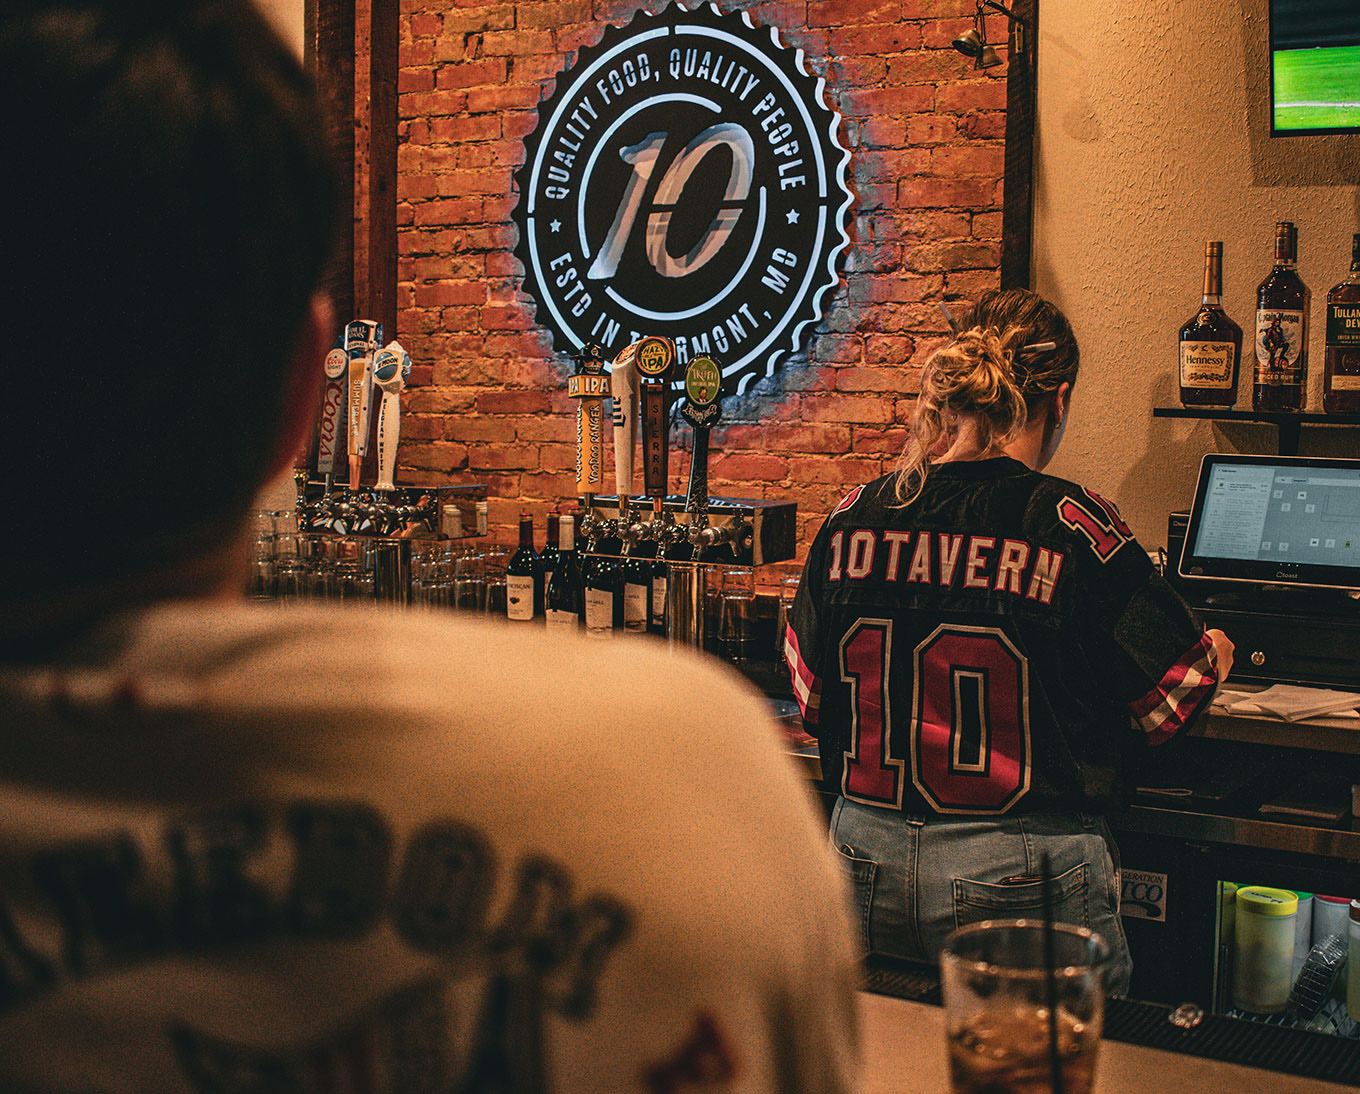 10Tavern bartender wearing a 10Tavern jersey behind the bar